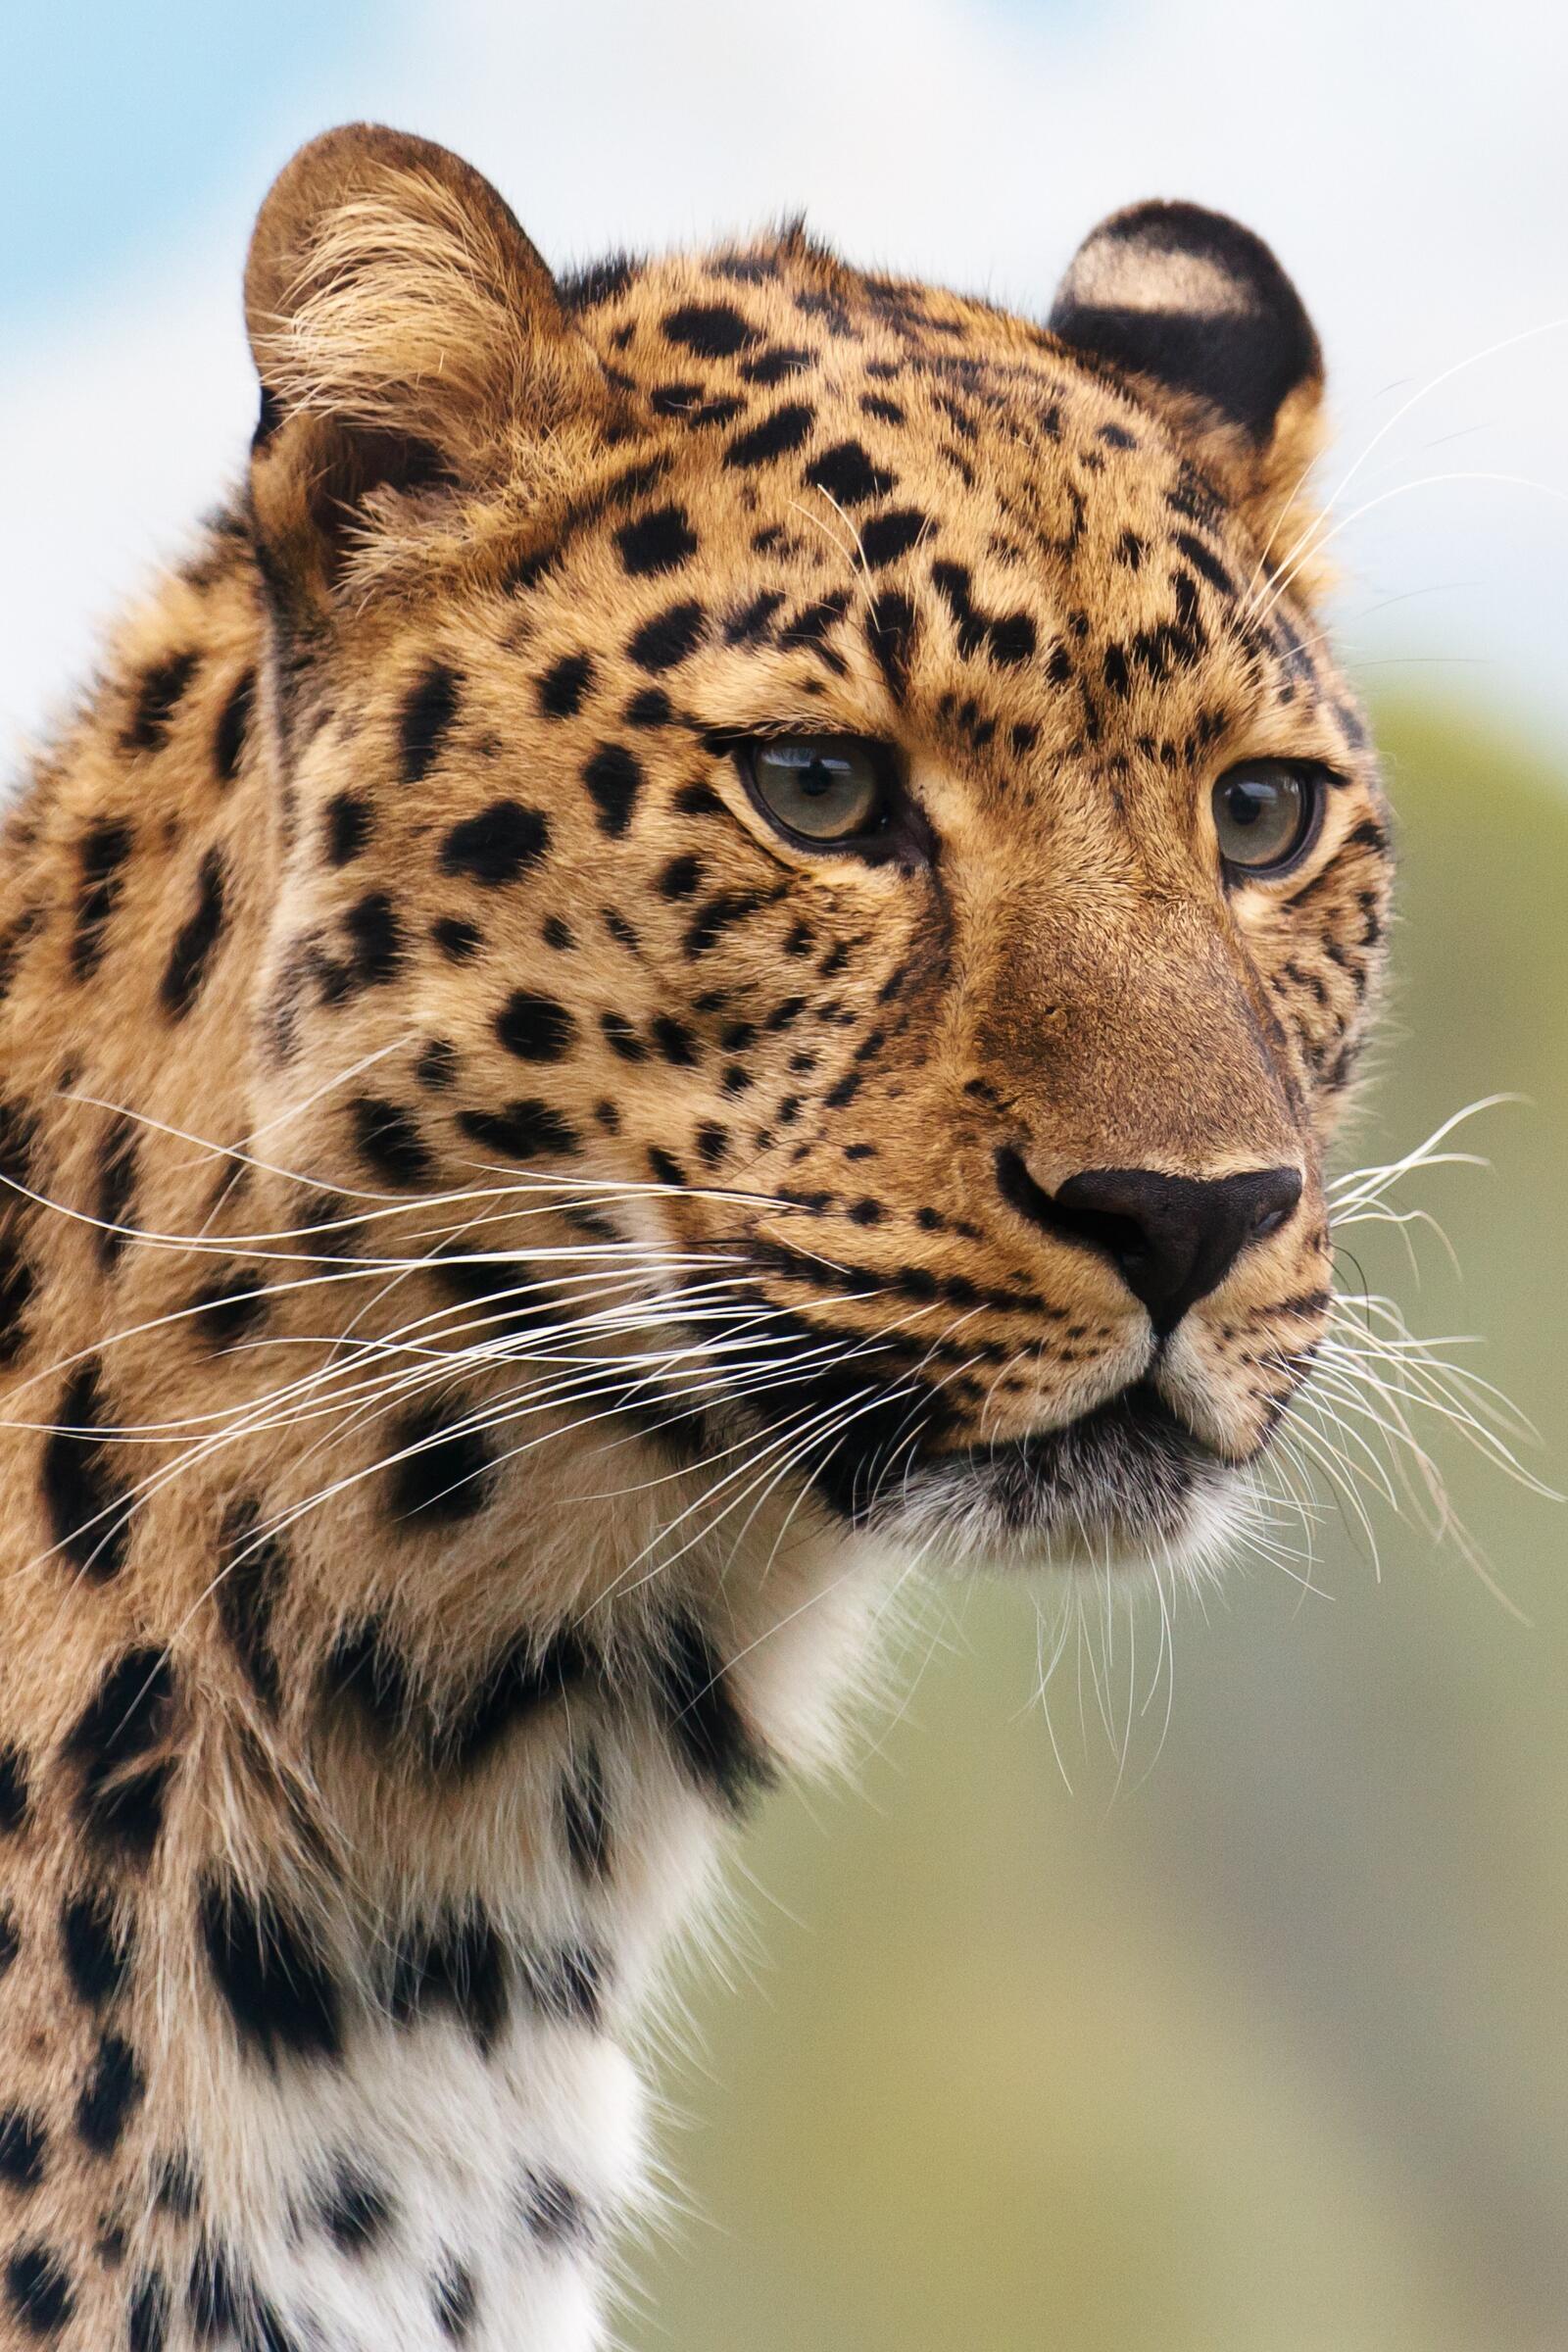 Бесплатное фото Молодой леопард